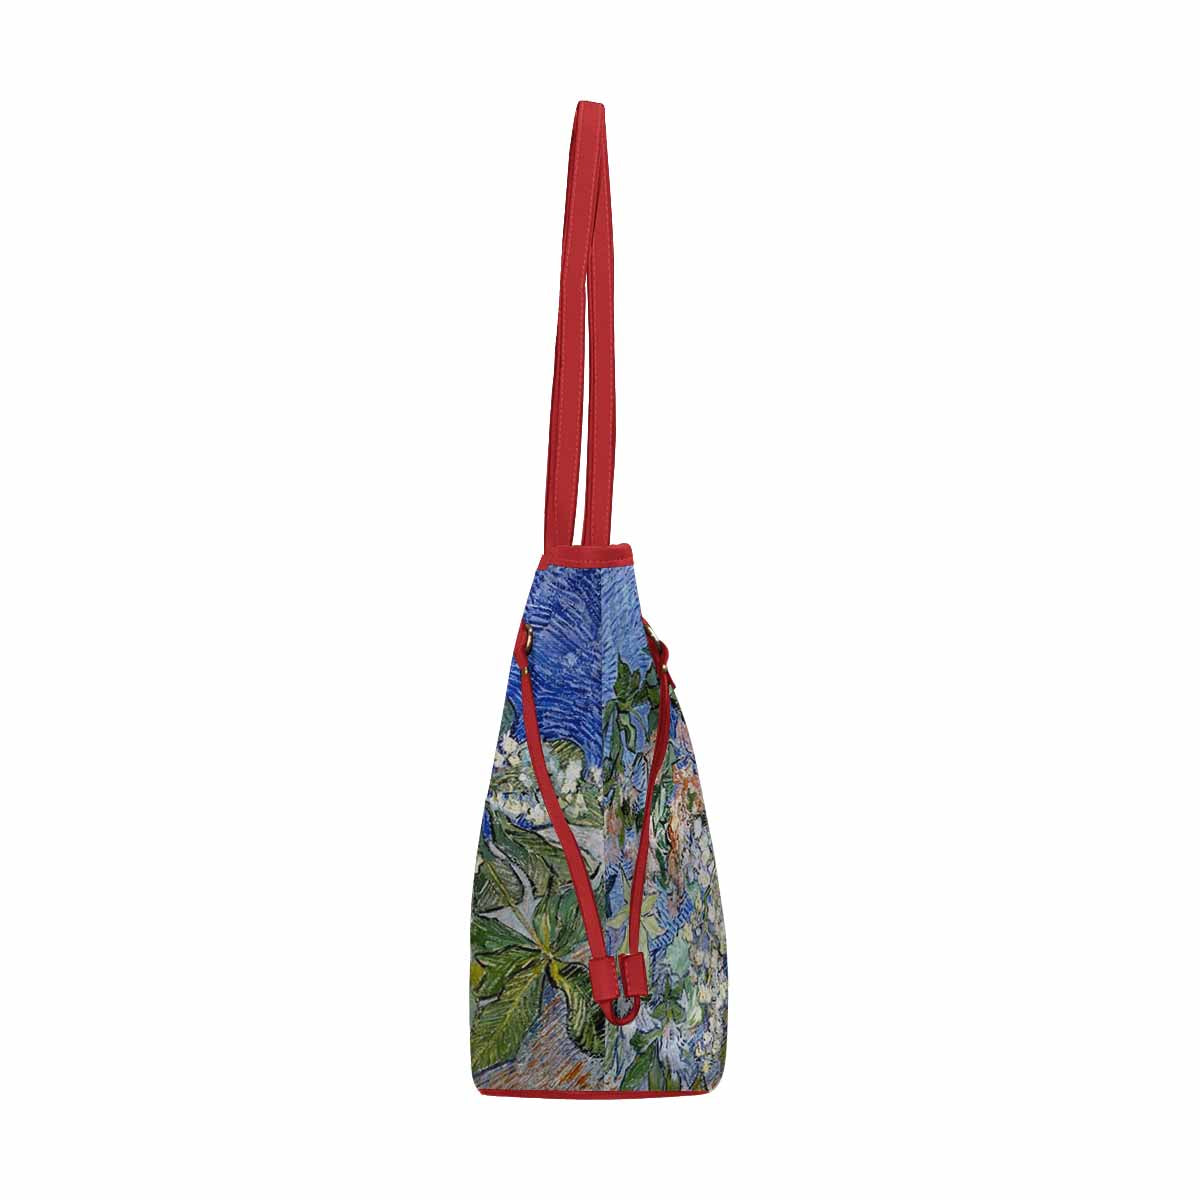 Vintage Floral Handbag, Classic Handbag, Mod 1695361 Design 04, RED TRIM